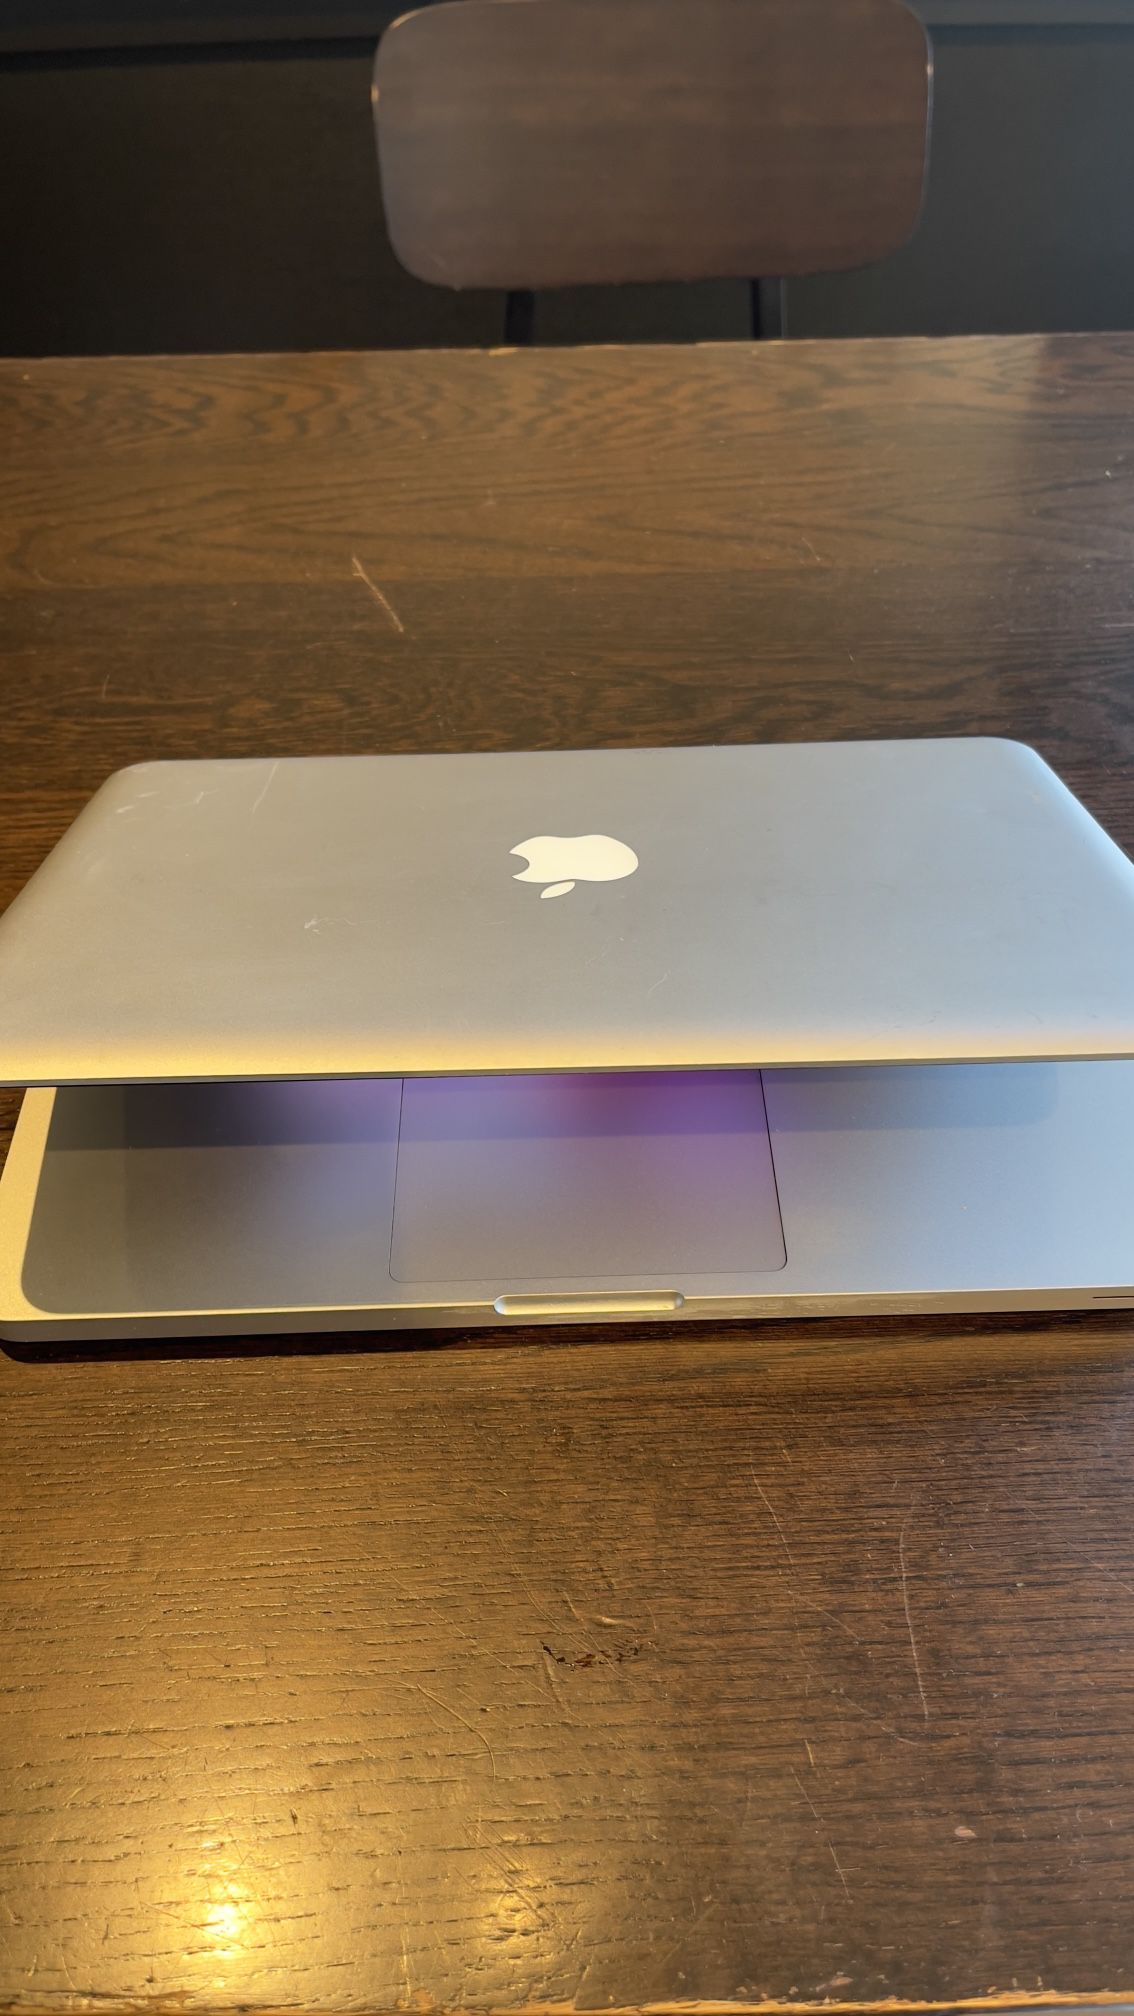 Apple MacBook Pro 13” Core 2 Duo , 6GB RAM, 500GN STORAGE $120